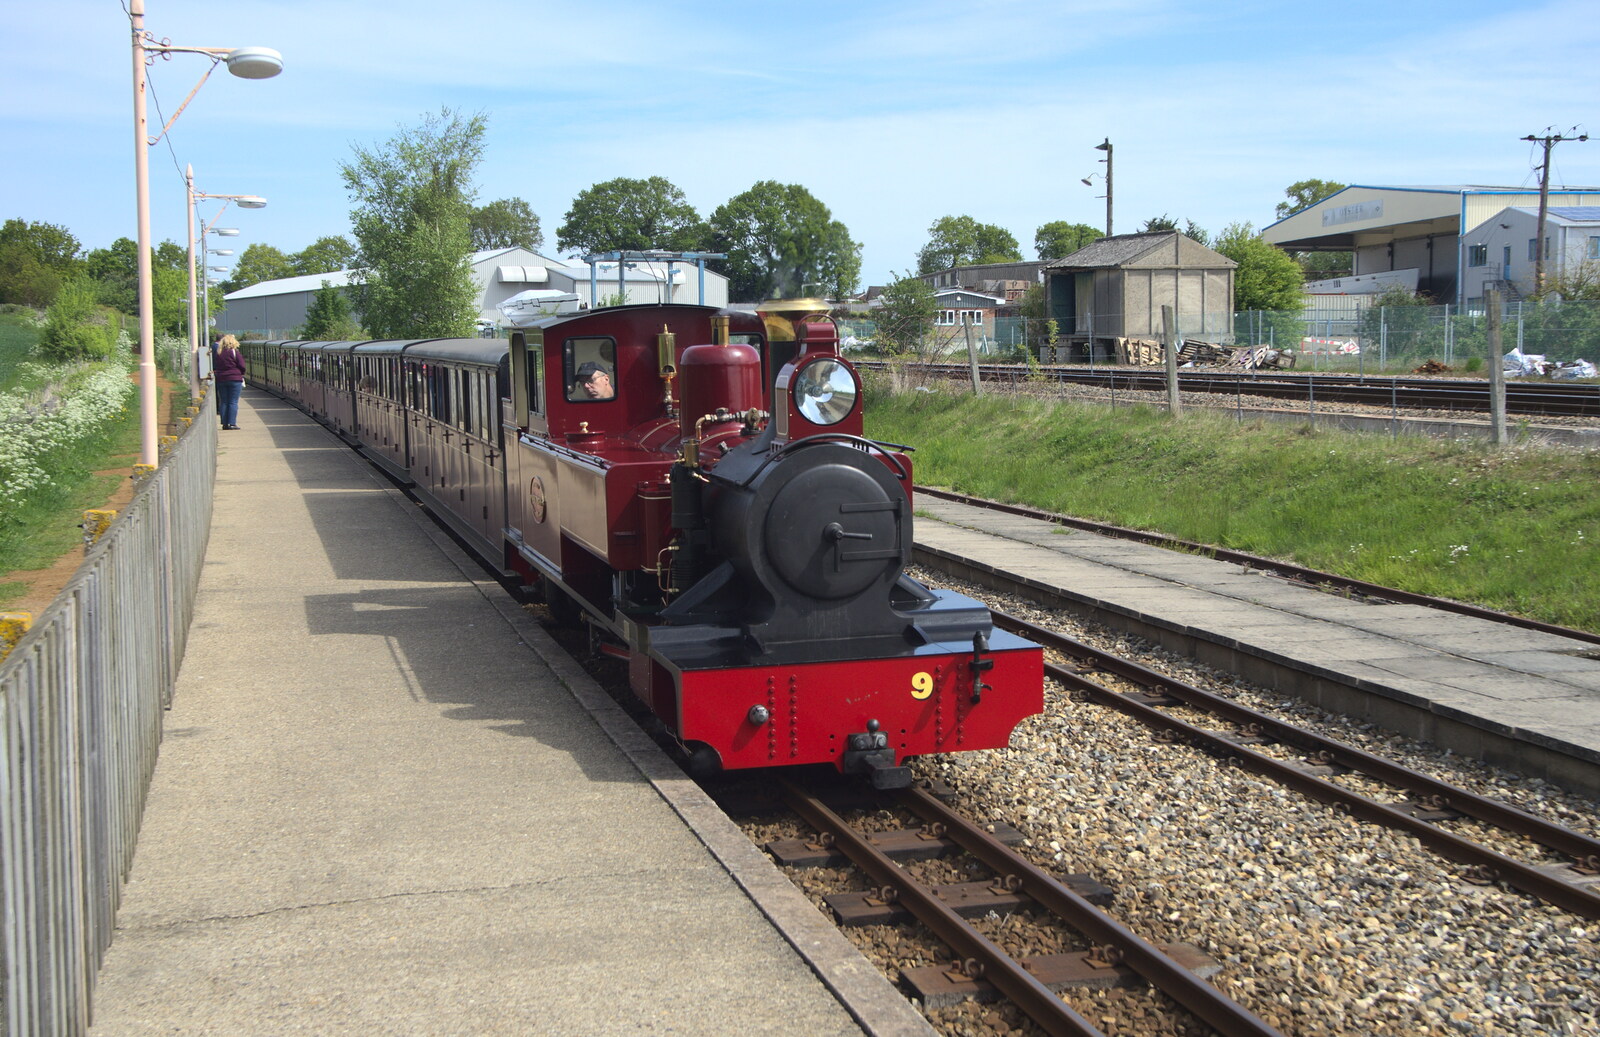 The mini train waits at the platform from The Bure Valley Railway, Aylsham, Norfolk - 26th May 2013